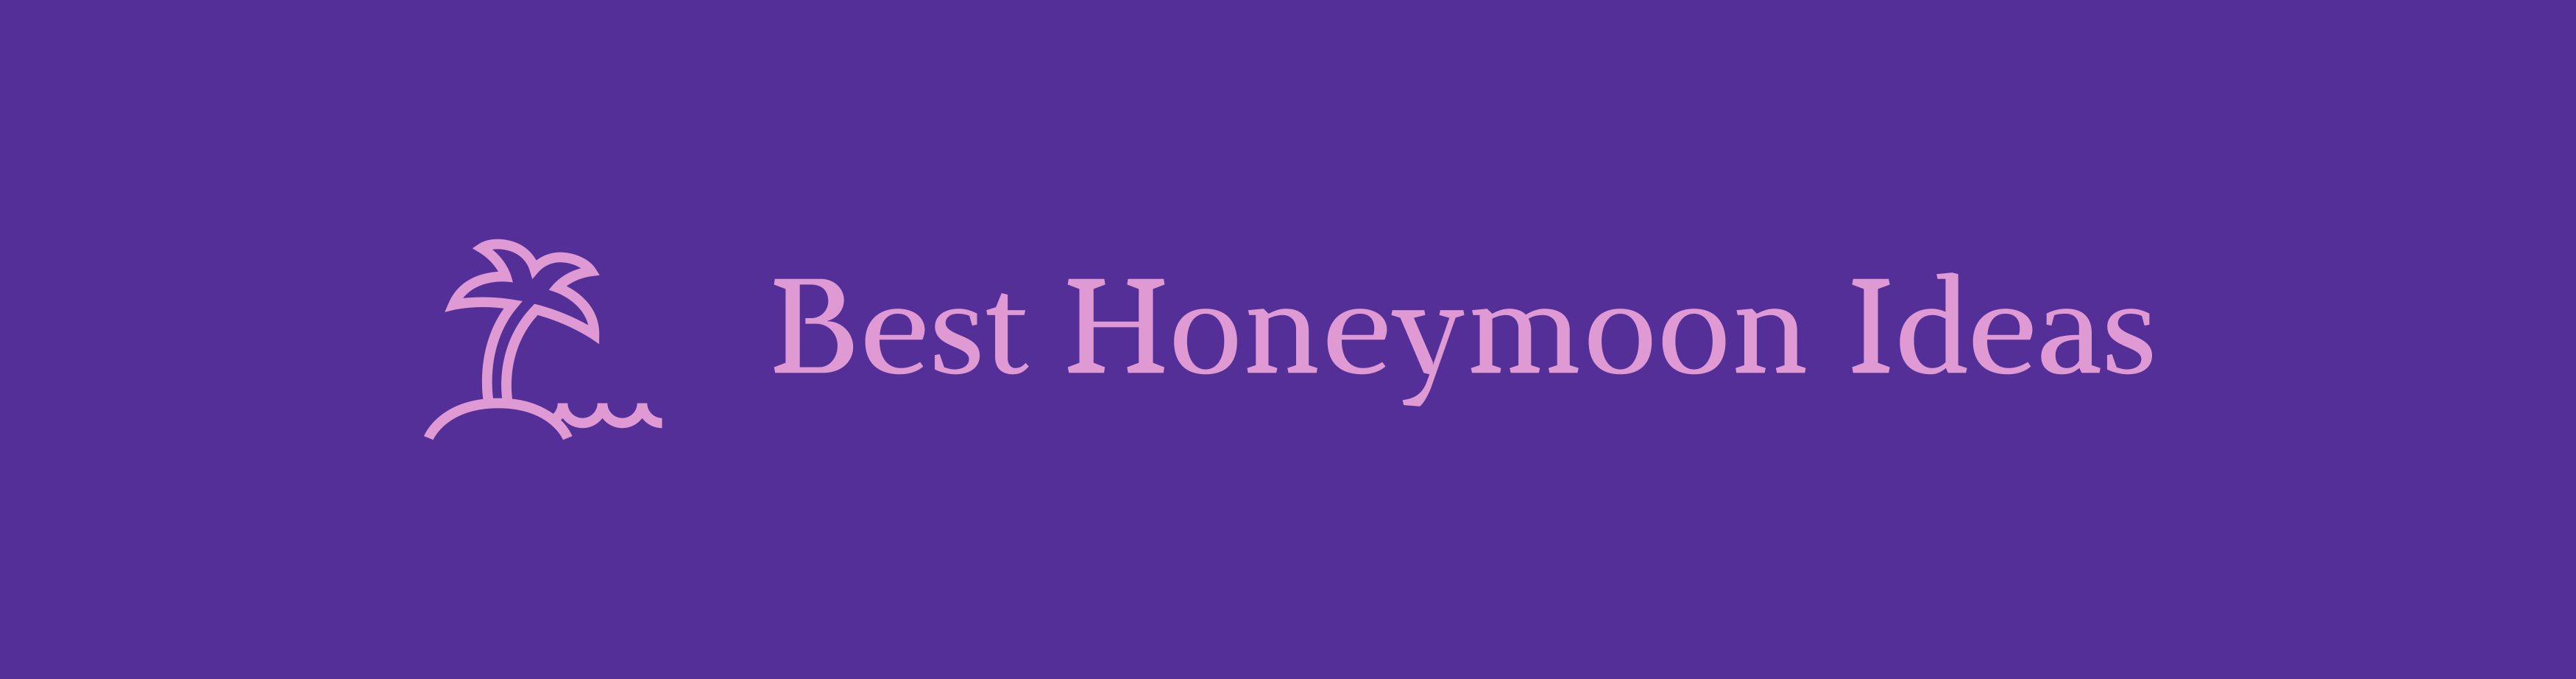 Best Honeymoon Ideas